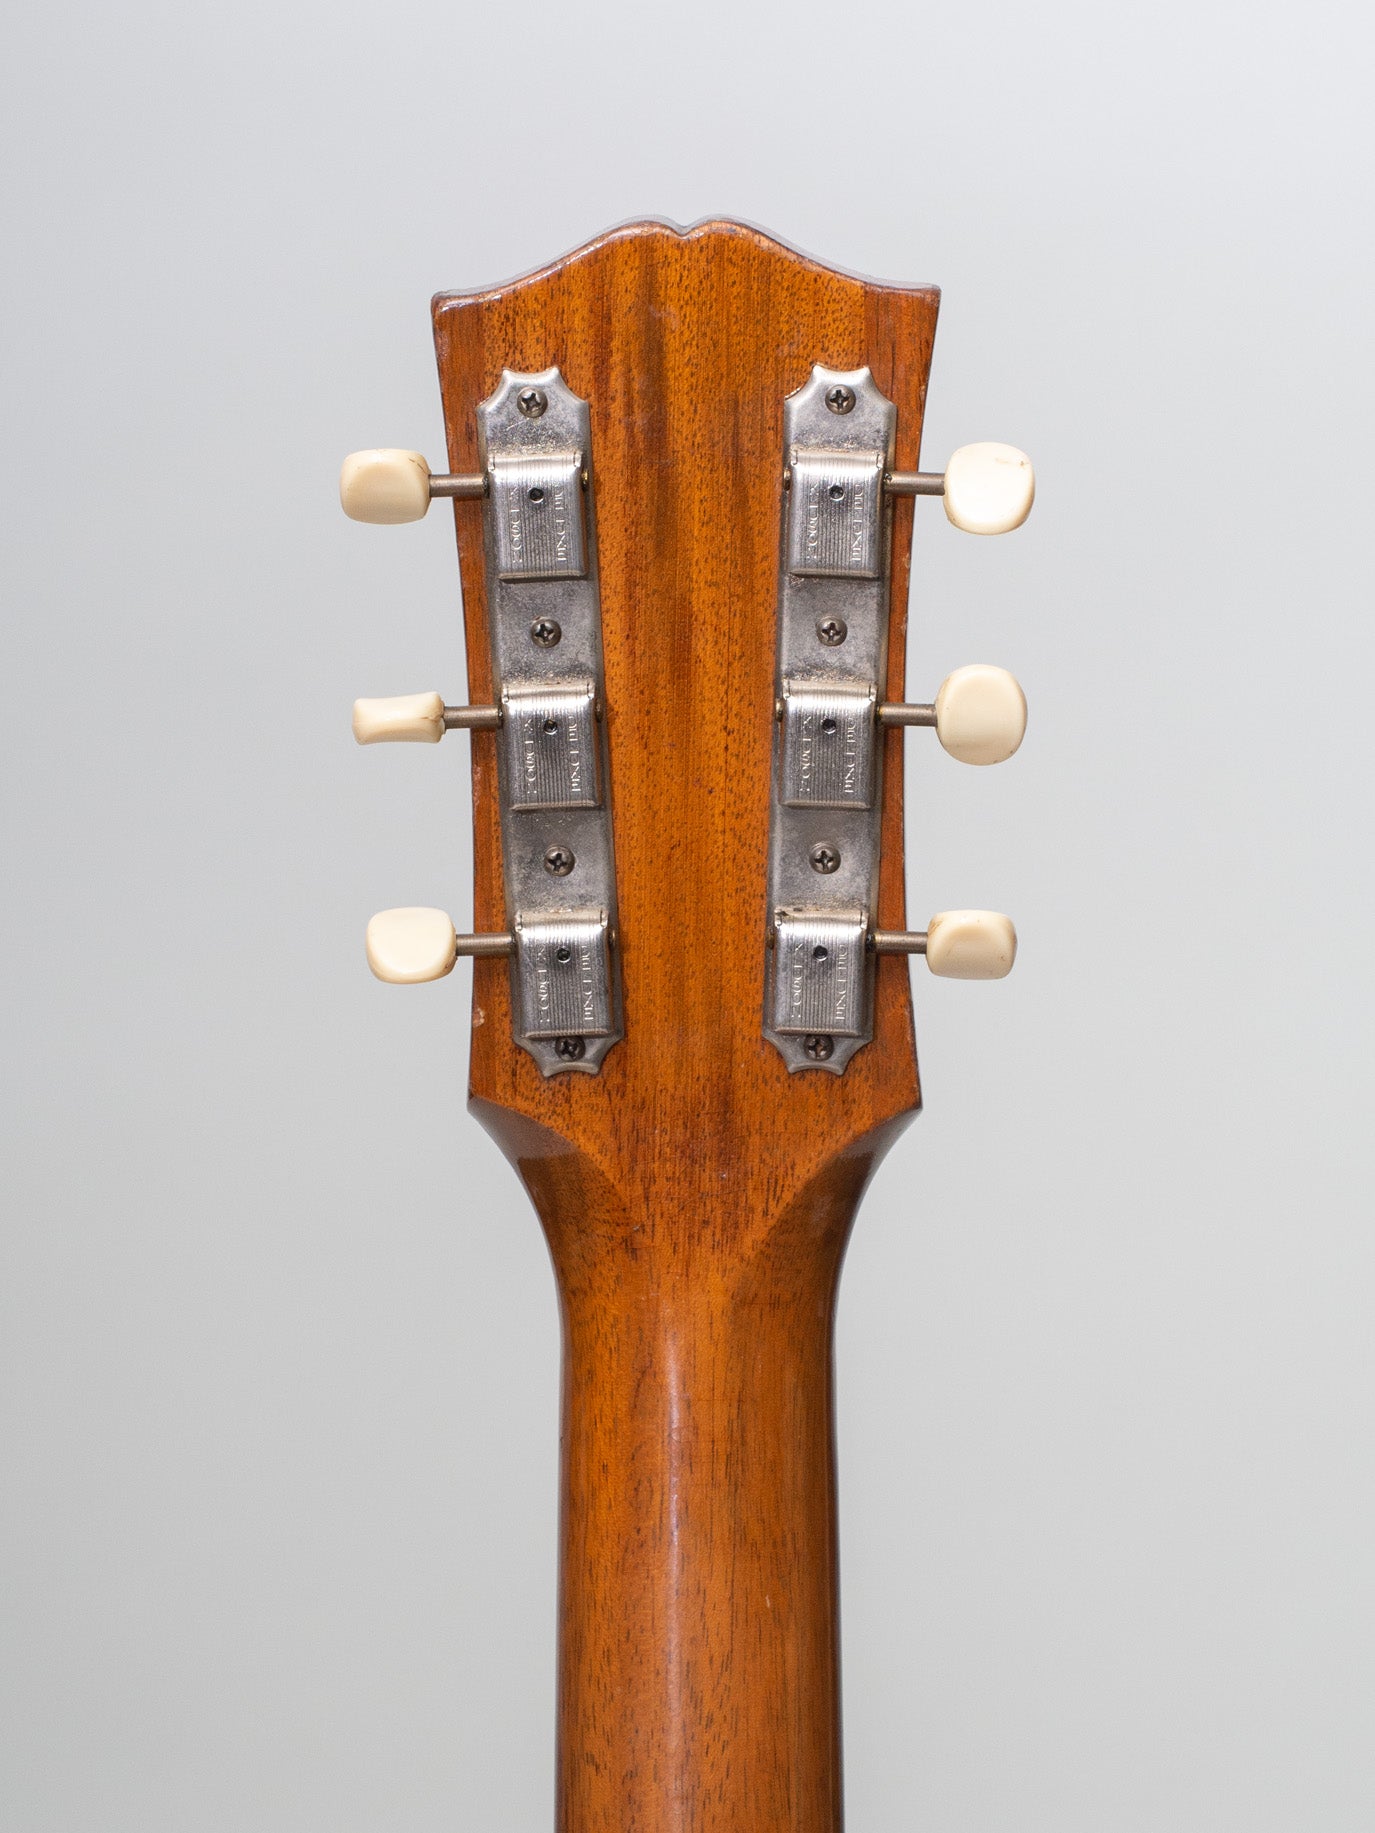 1951 Gibson J-50